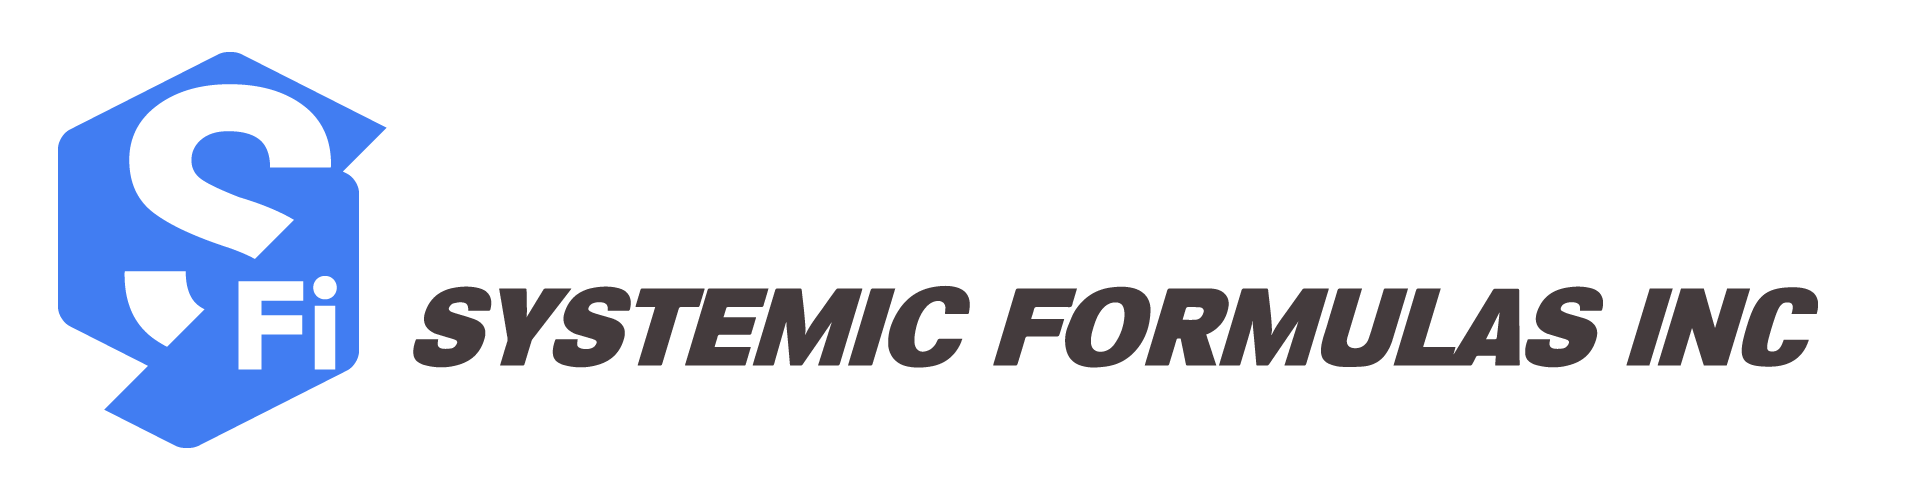 systemic formulas logo